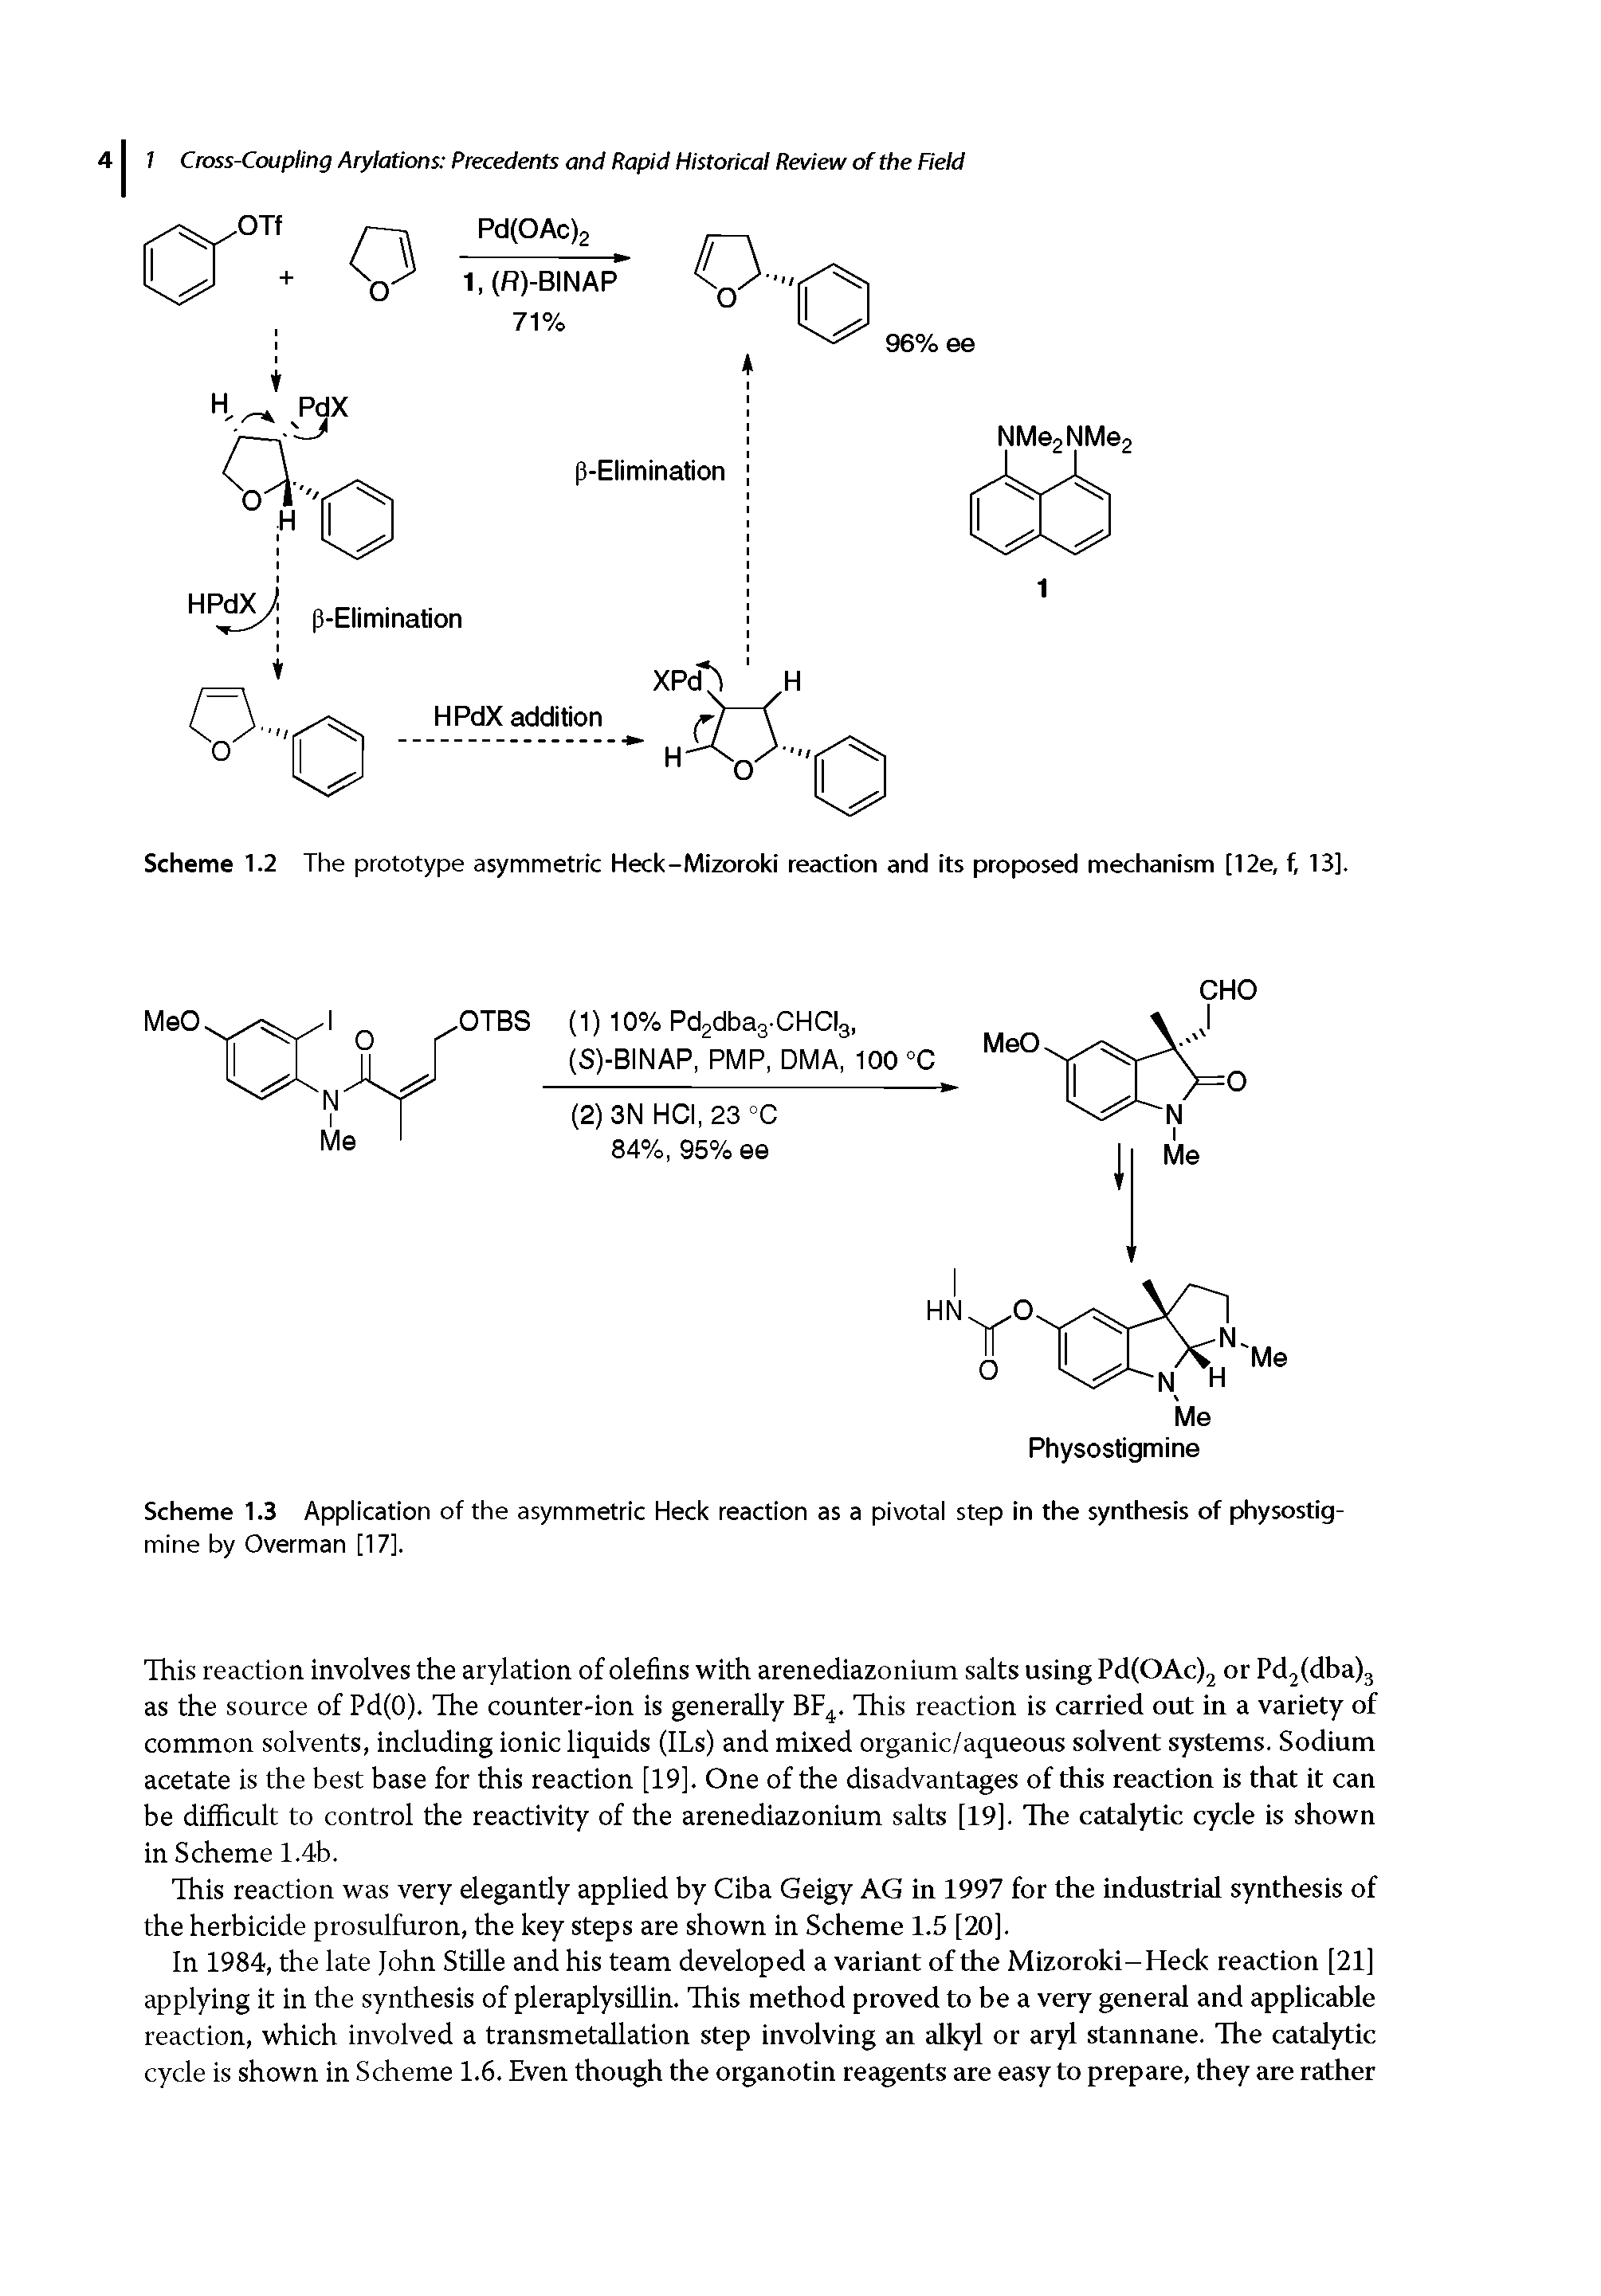 Scheme 1.2 The prototype asymmetric Heck-Mizoroki reaction and its proposed mechanism [12e, f, 13],...